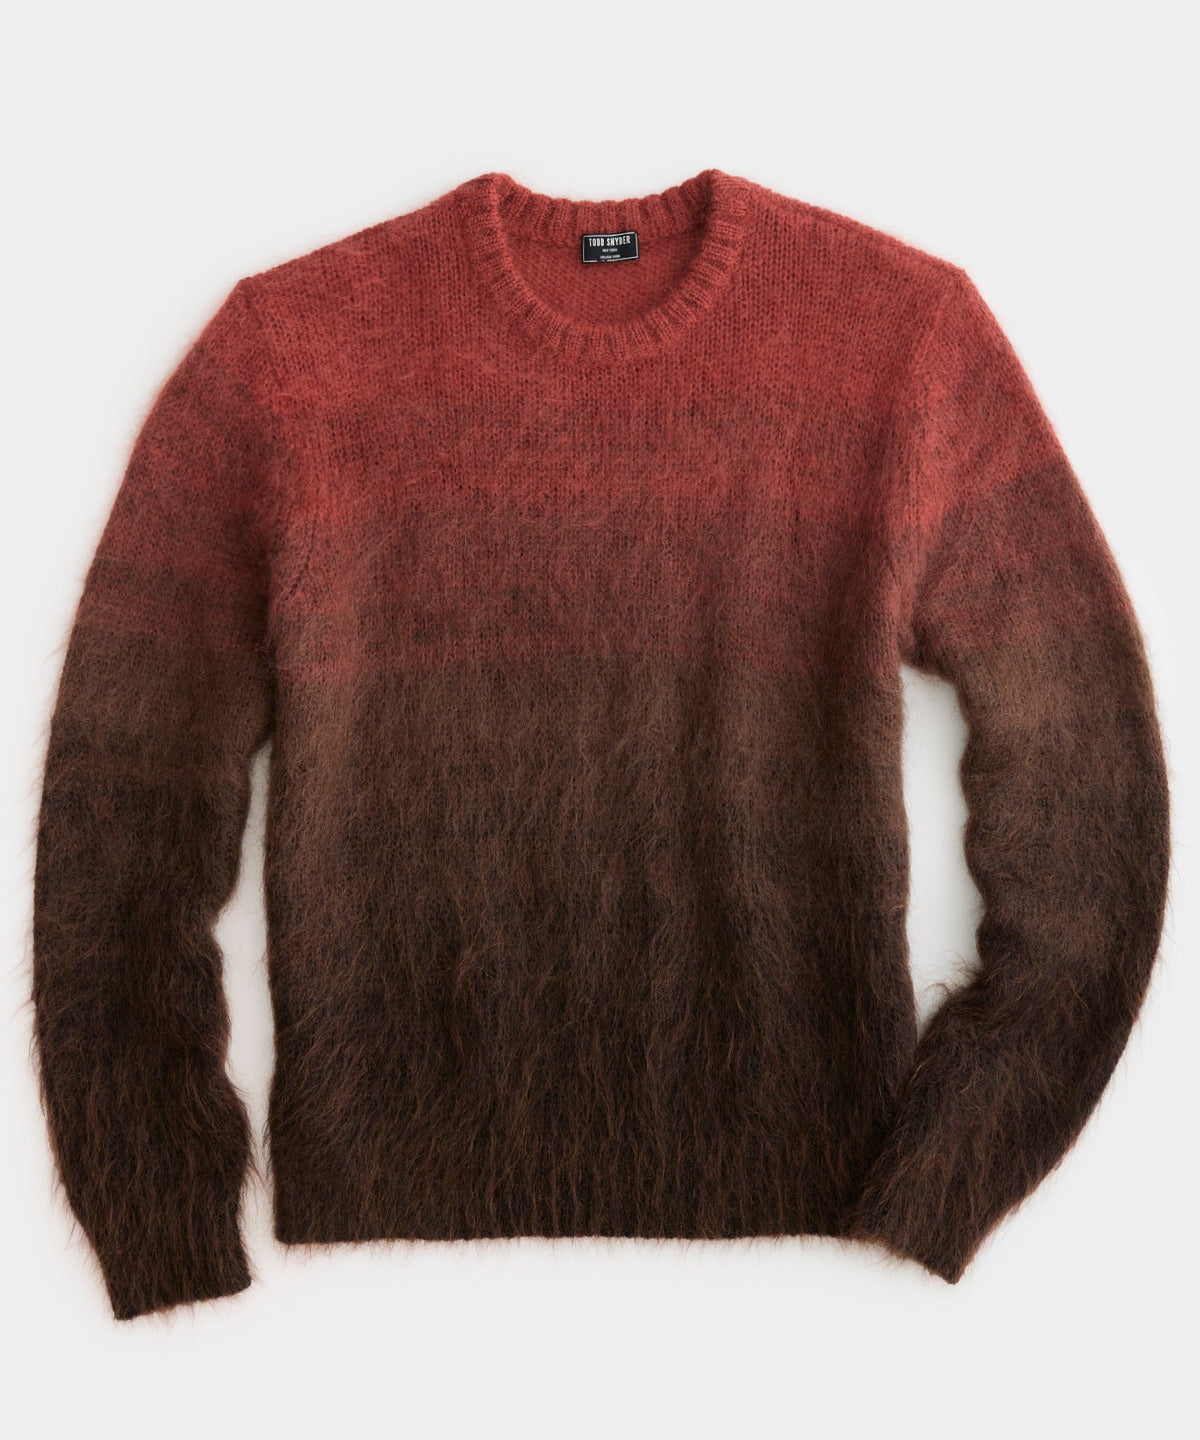 Ombre Mohair Crewneck Sweater in Beet Root